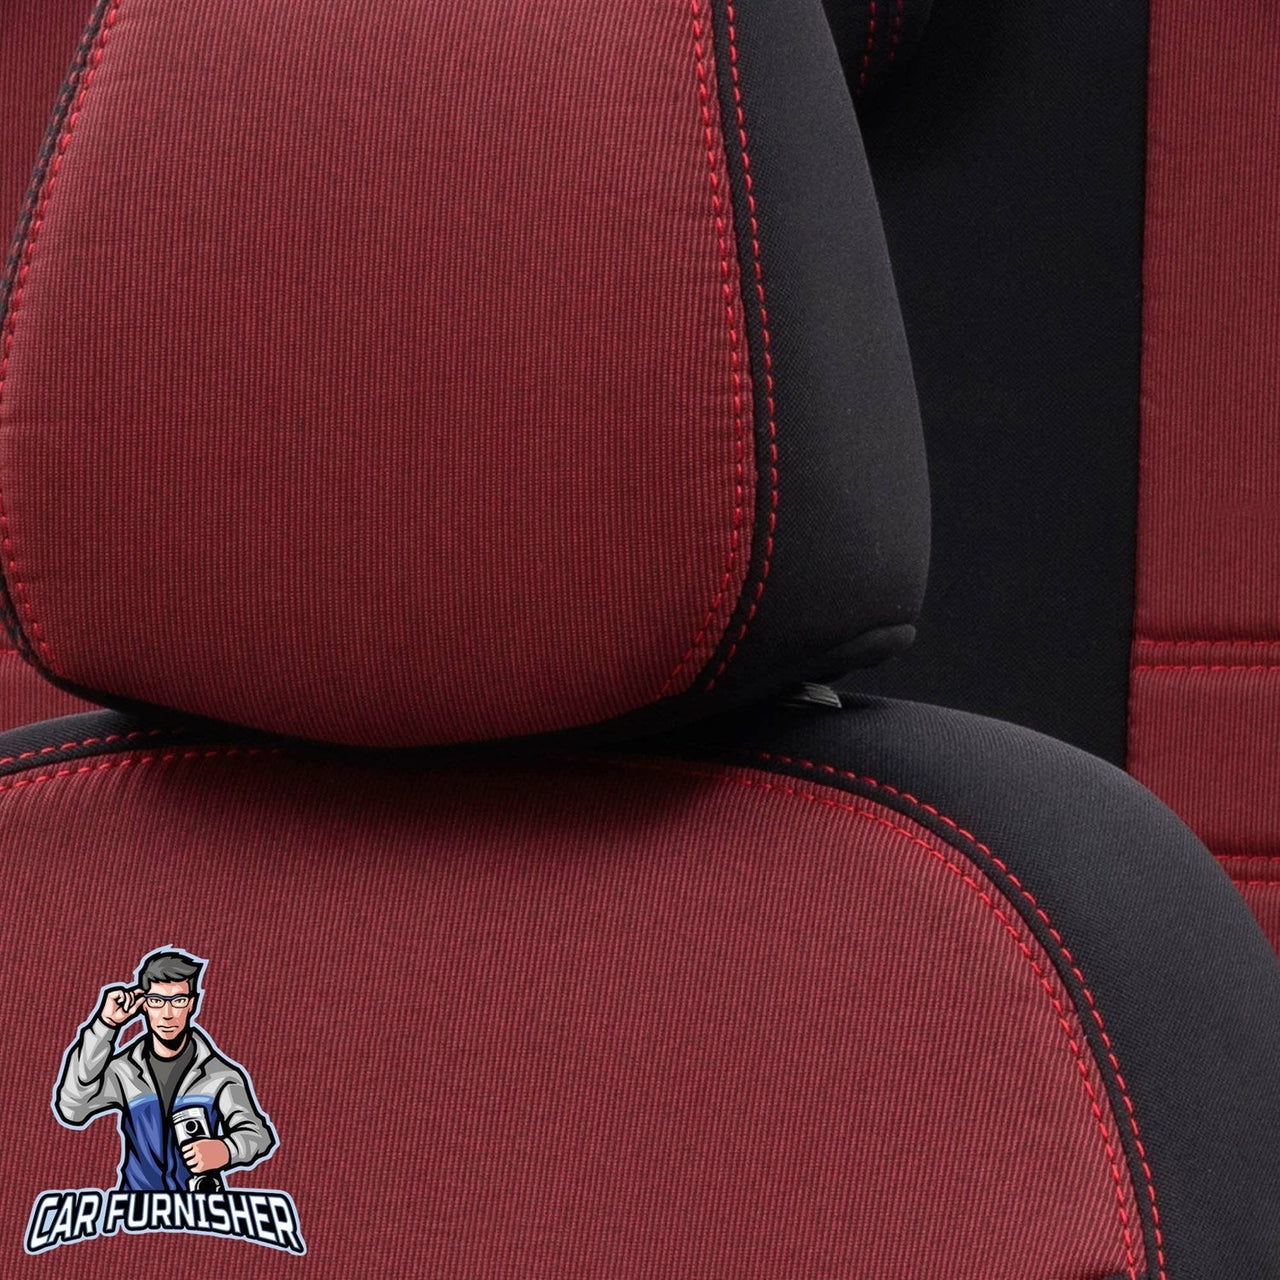 Subaru Legacy Seat Cover Original Jacquard Design Red Jacquard Fabric